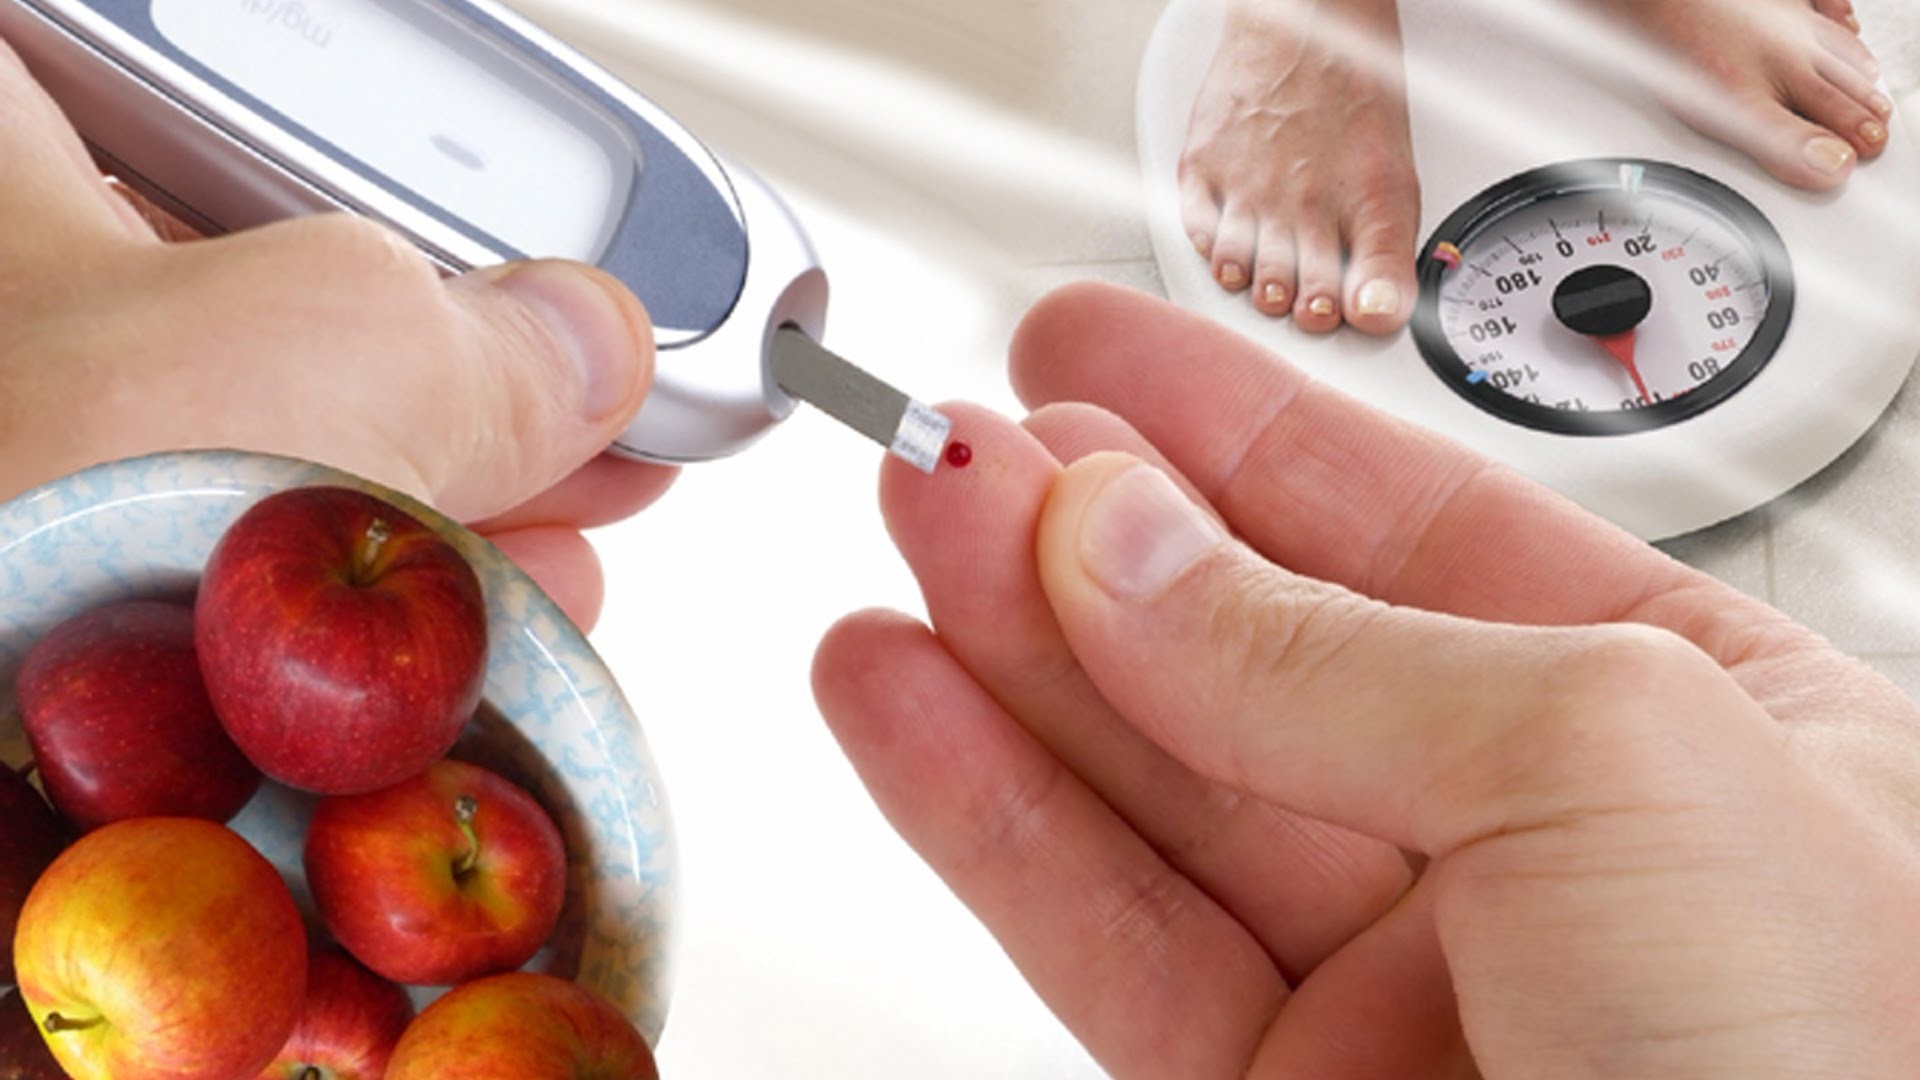 Artificial pancreas to help diabetics control blood sugar levels